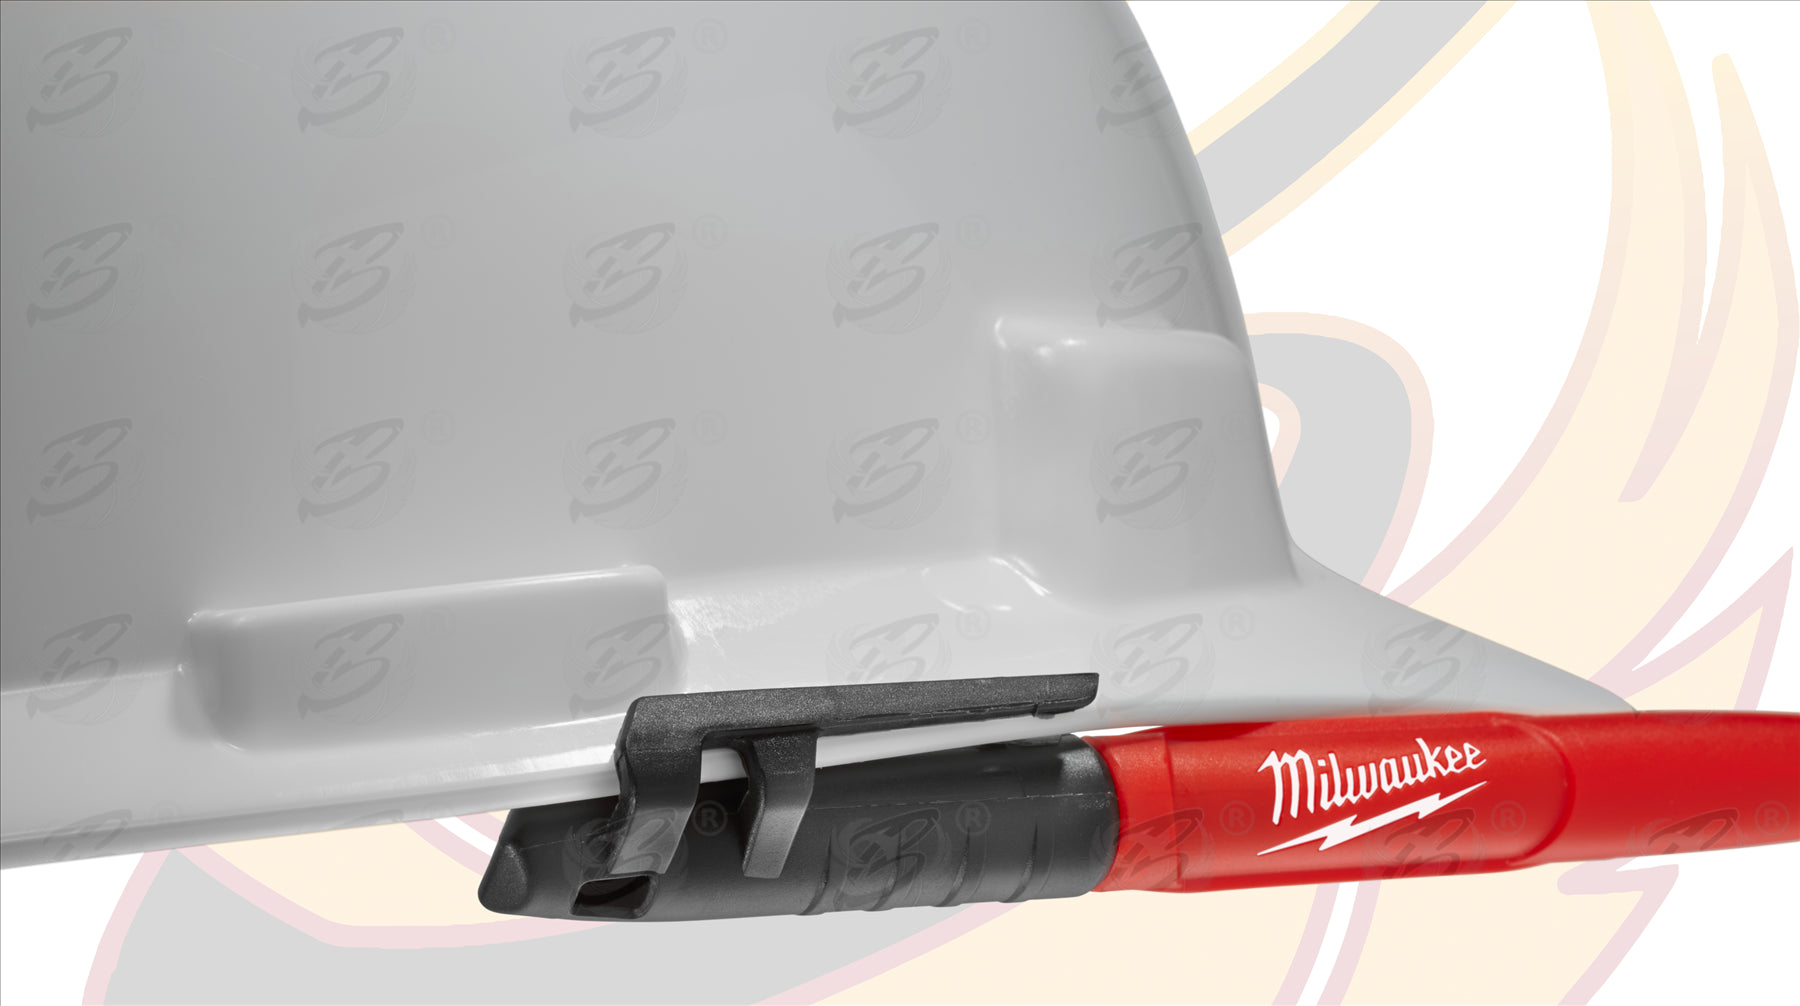 MILWAUKEE INKZALL 1mm ALL SURFACE MARKER PEN ( x4 )